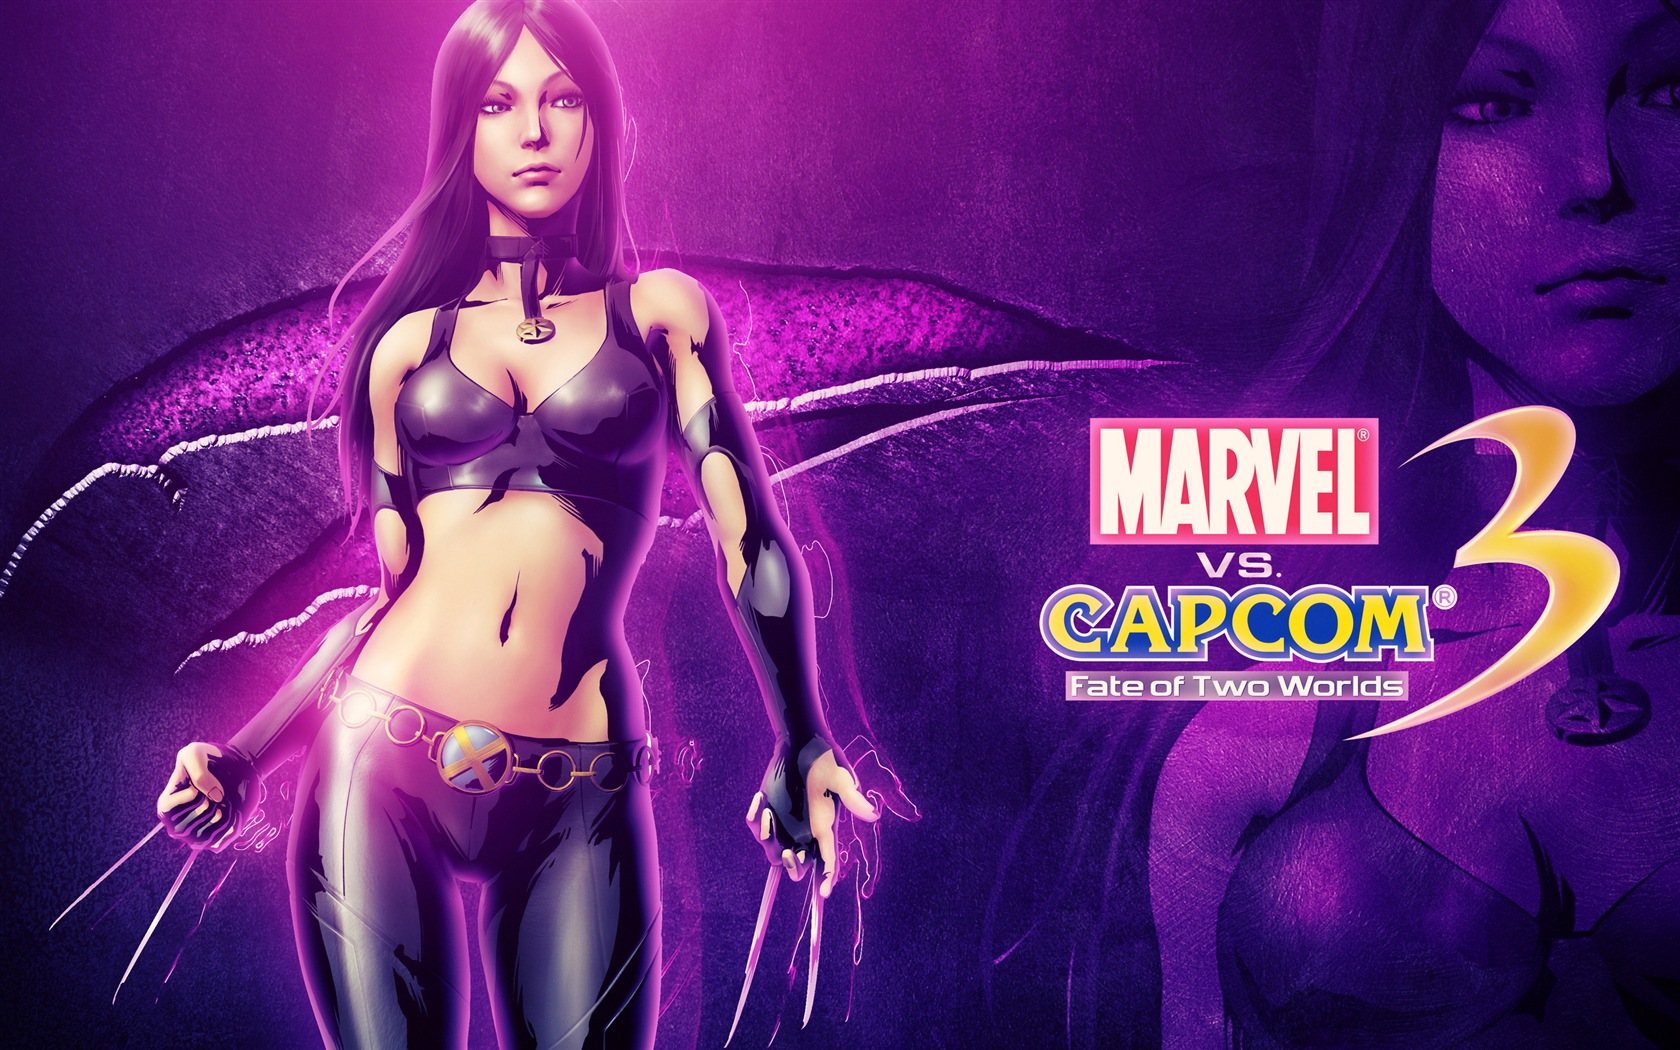 Marvel VS. Capcom 3: Fate of Two Worlds 漫畫英雄VS.卡普空3 高清遊戲壁紙 #10 - 1680x1050